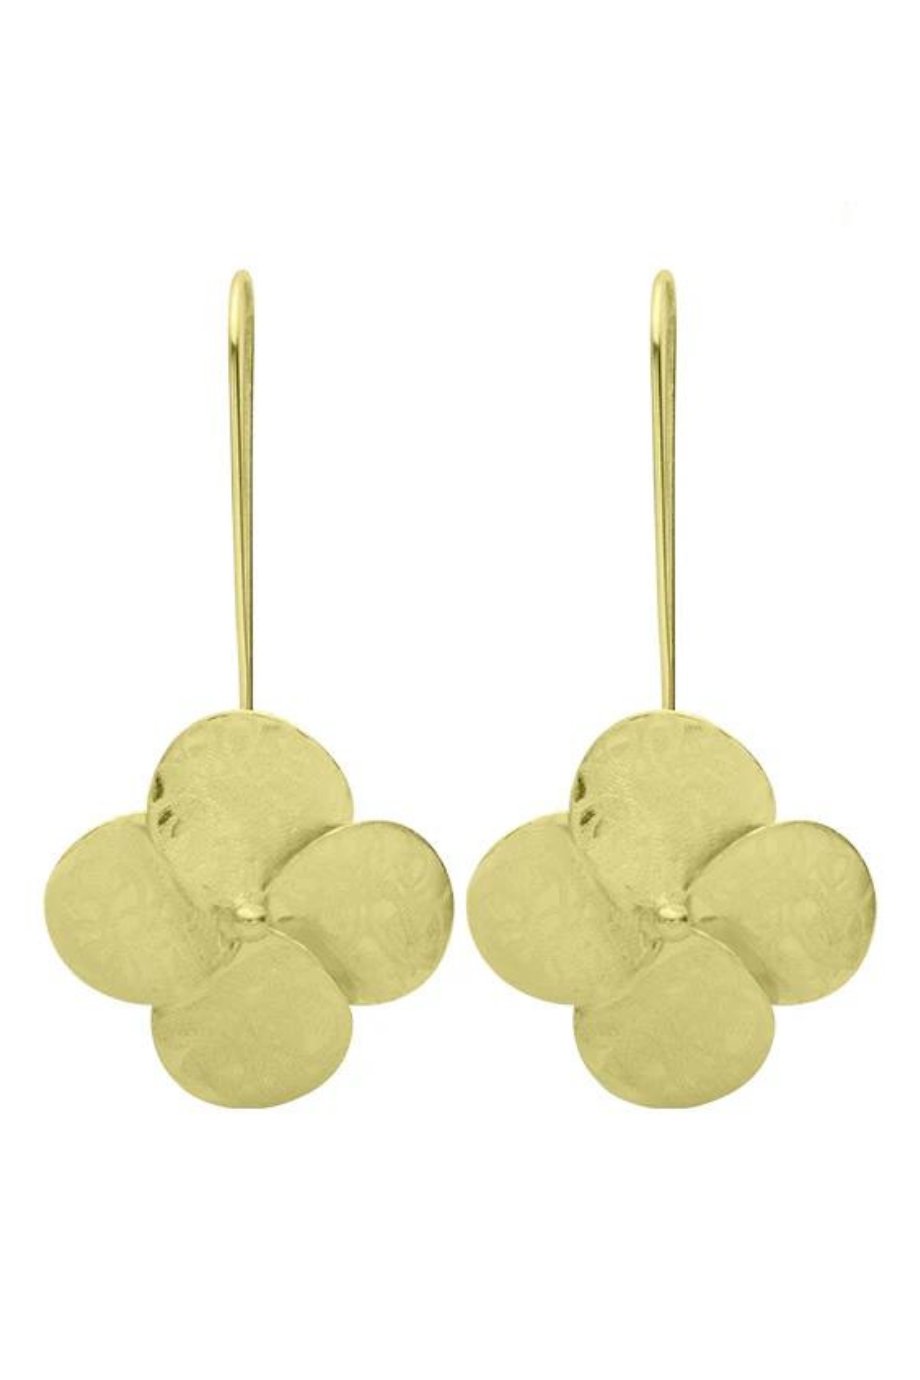 Flower Drop Earrings- Brushed Gold - Sheila Fajl - Color Game